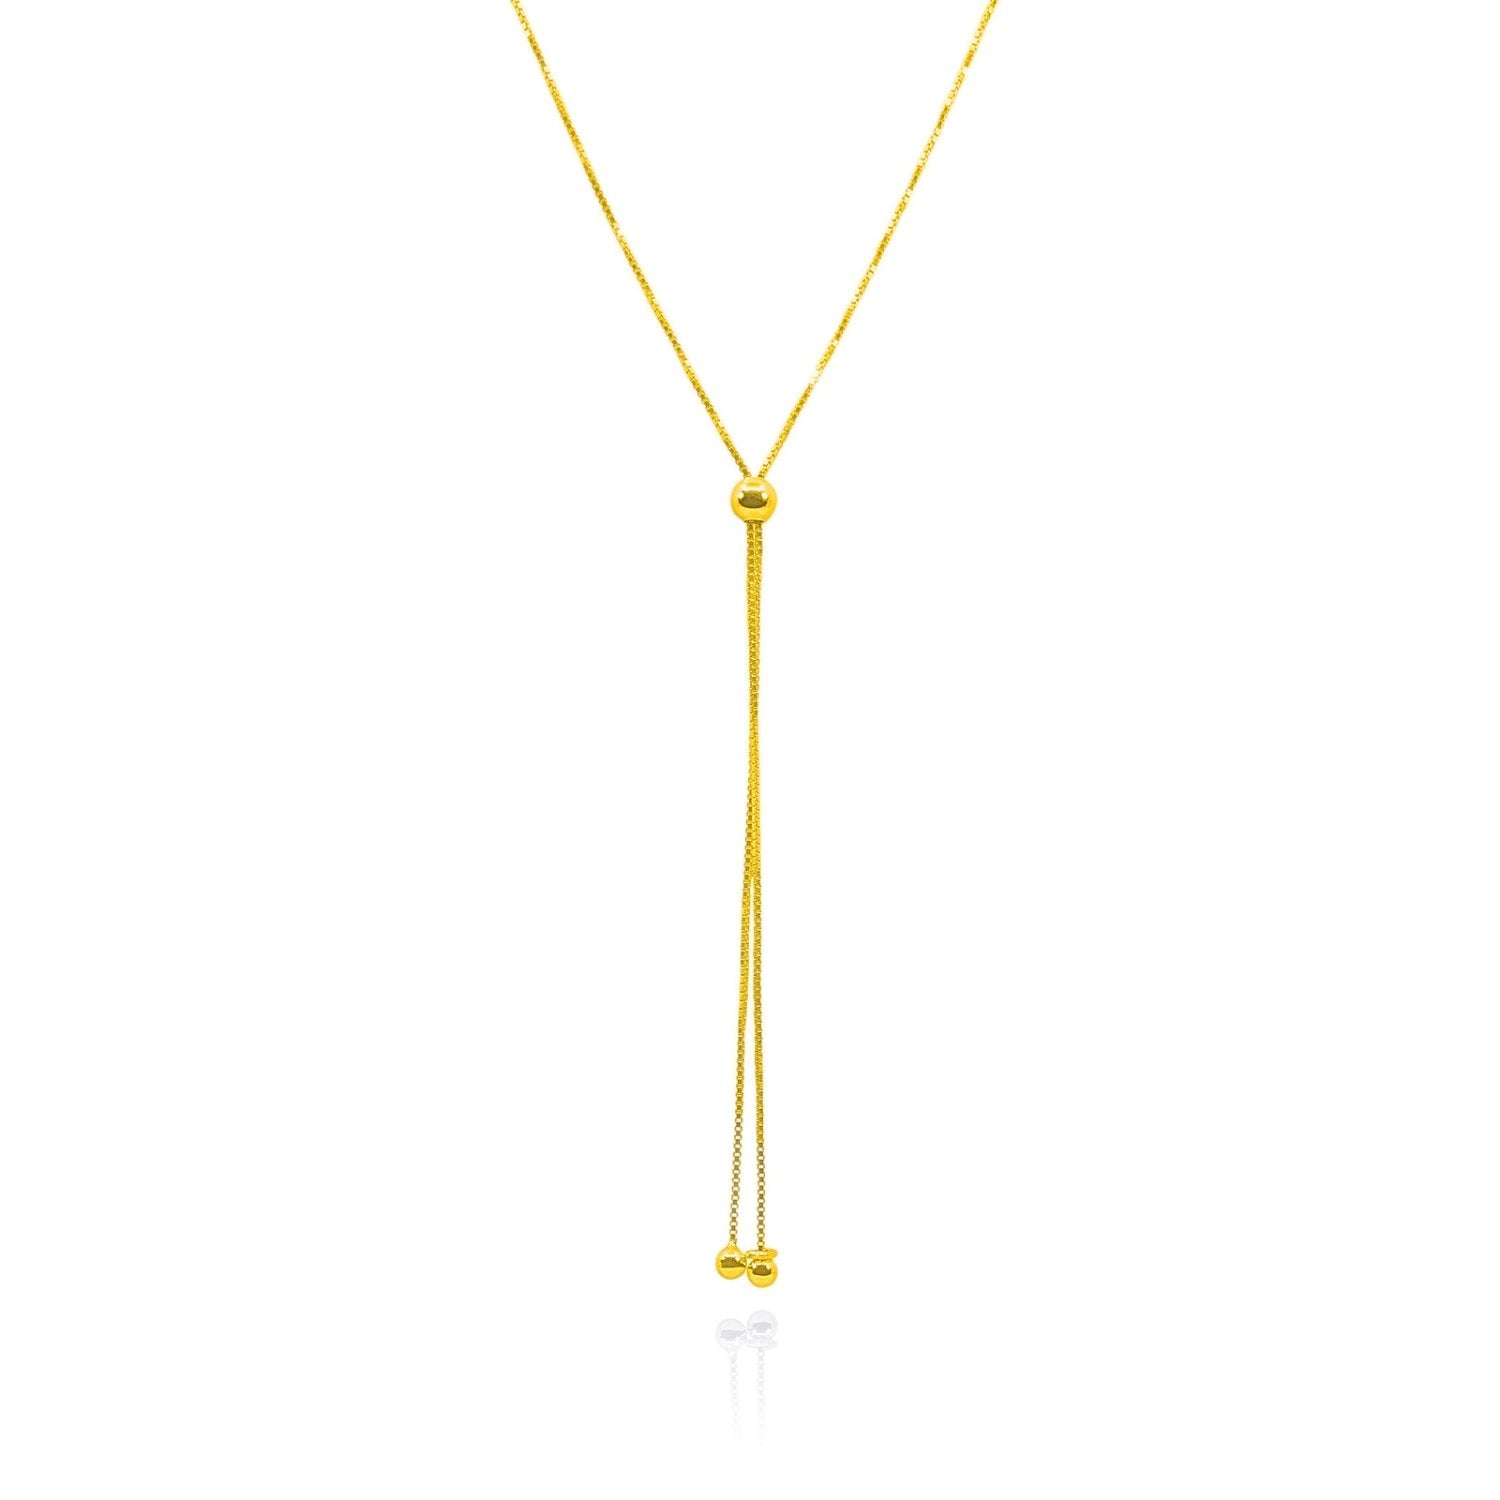 Courtney 18k Gold Vermeil Plated Filigree Adjustable Pendant Necklace - Necklaces